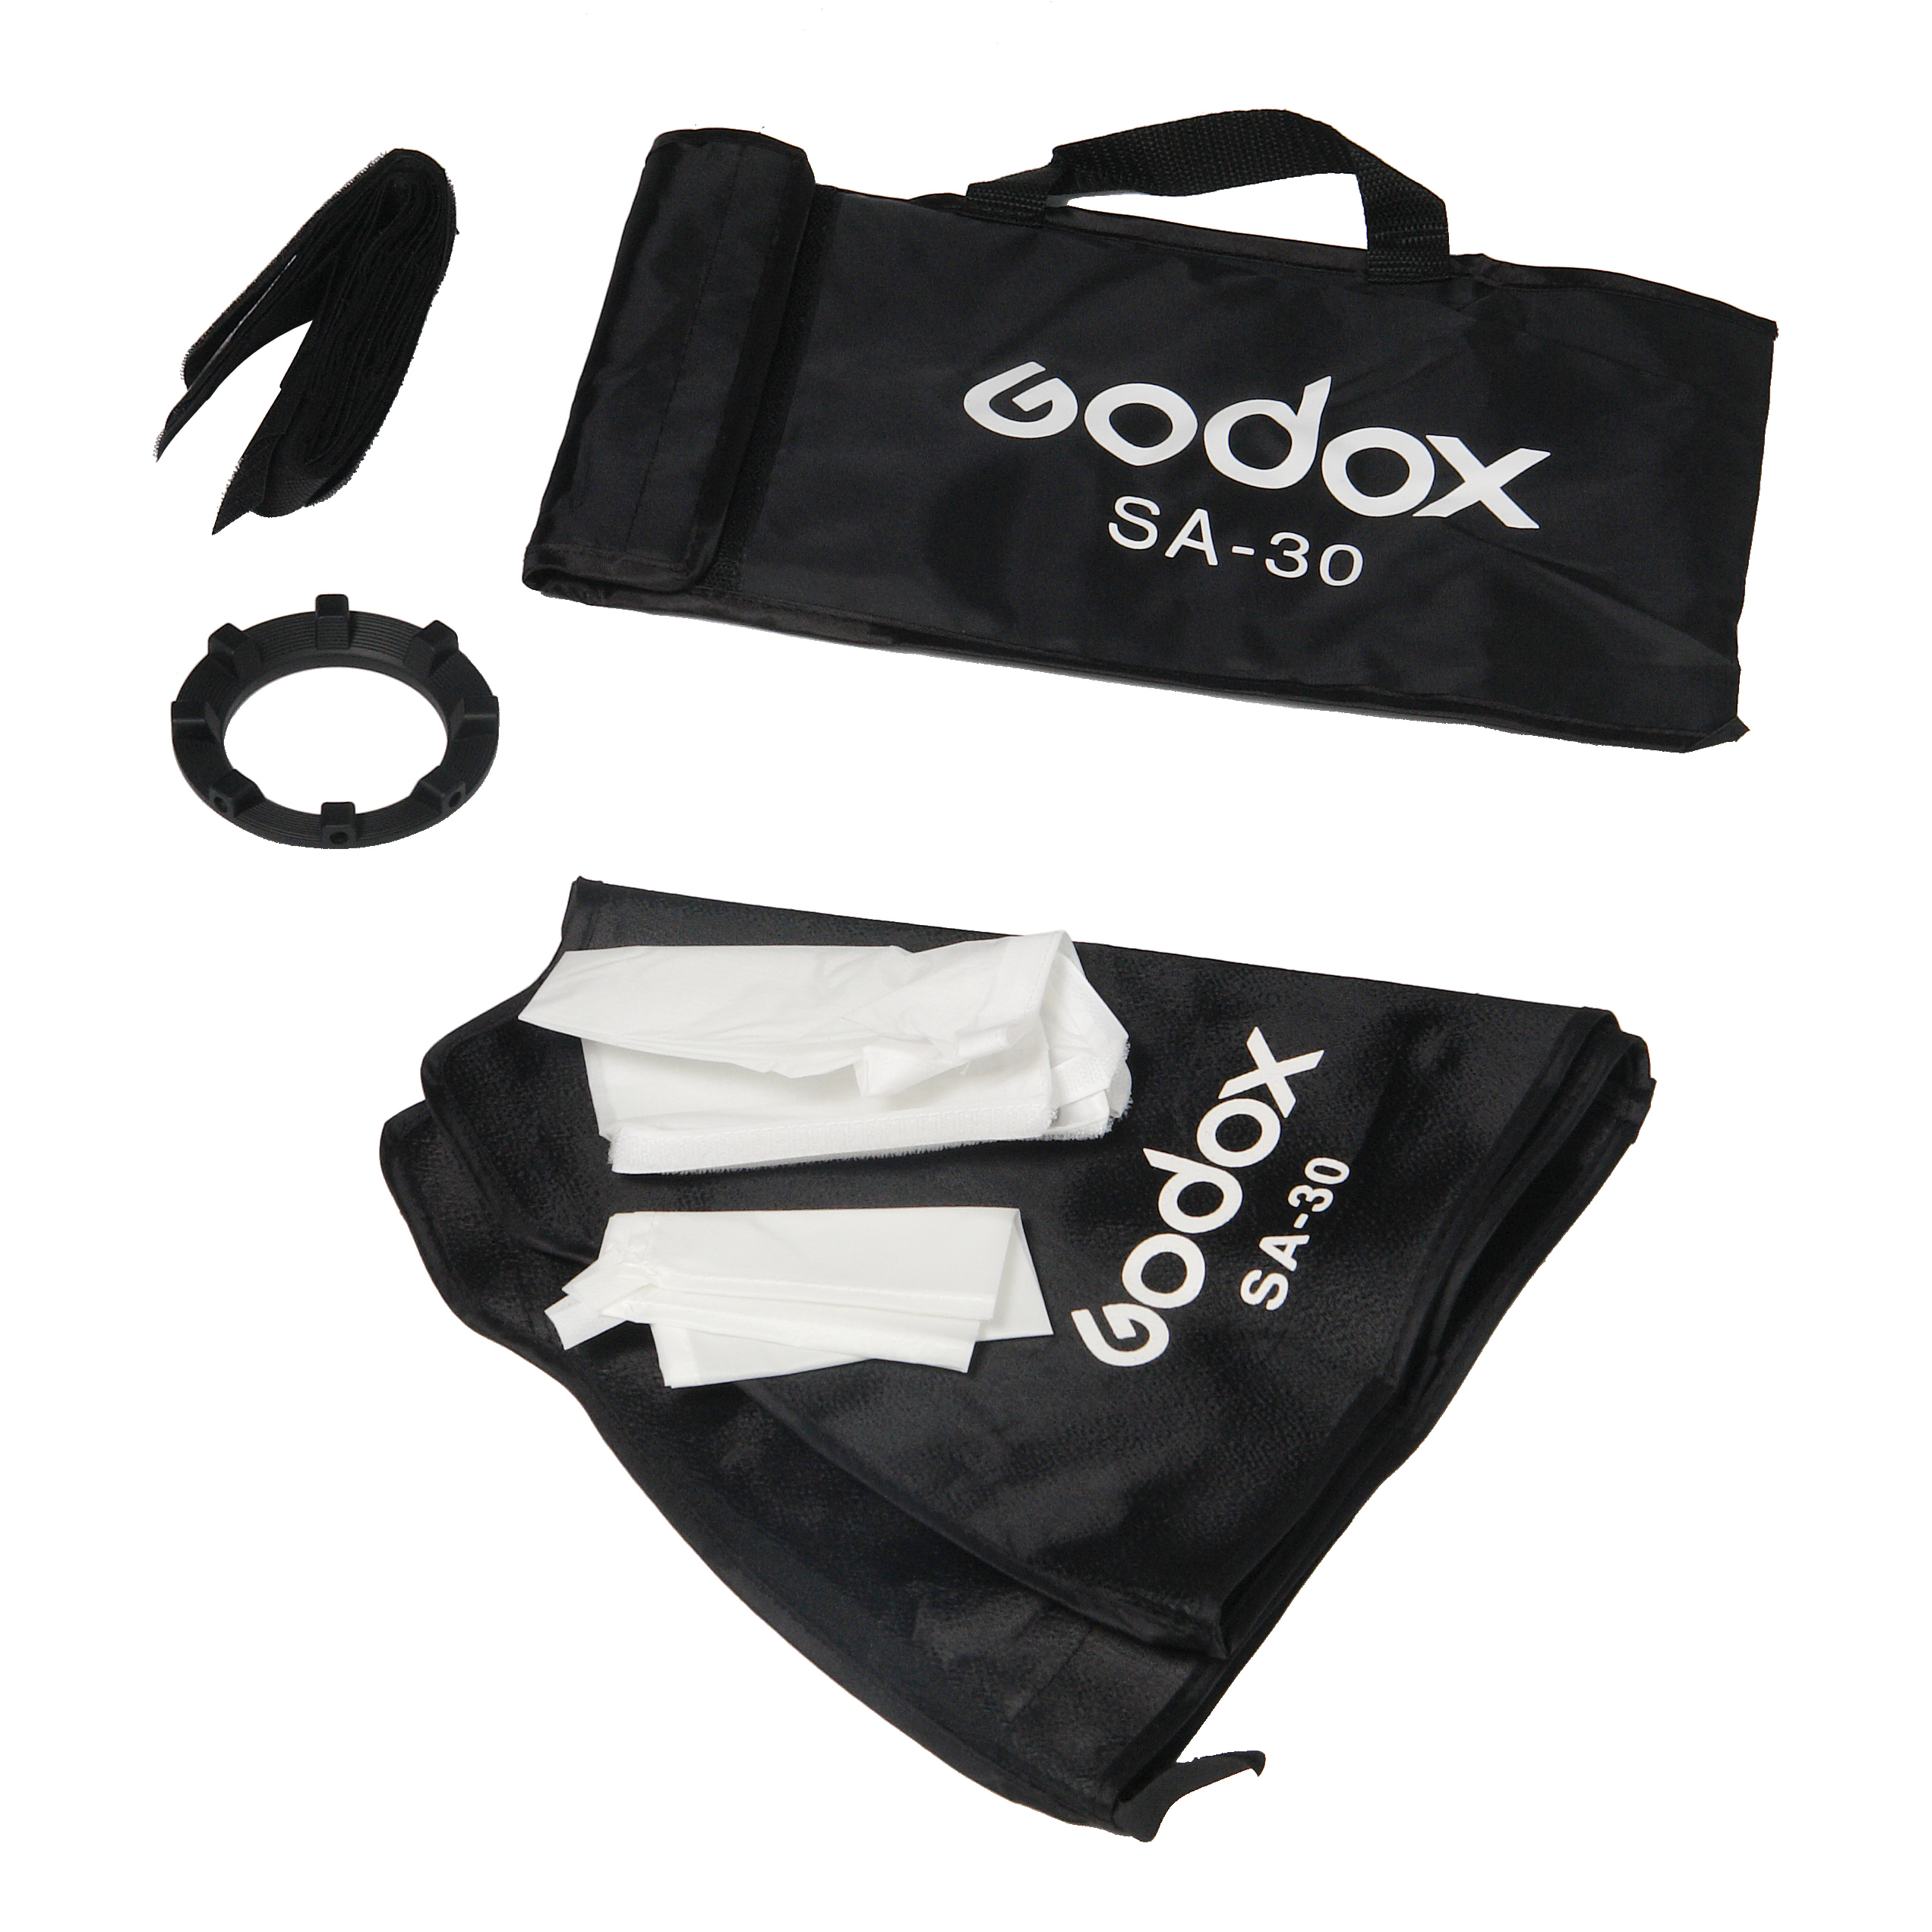     Godox SA-D   Ultra-mart